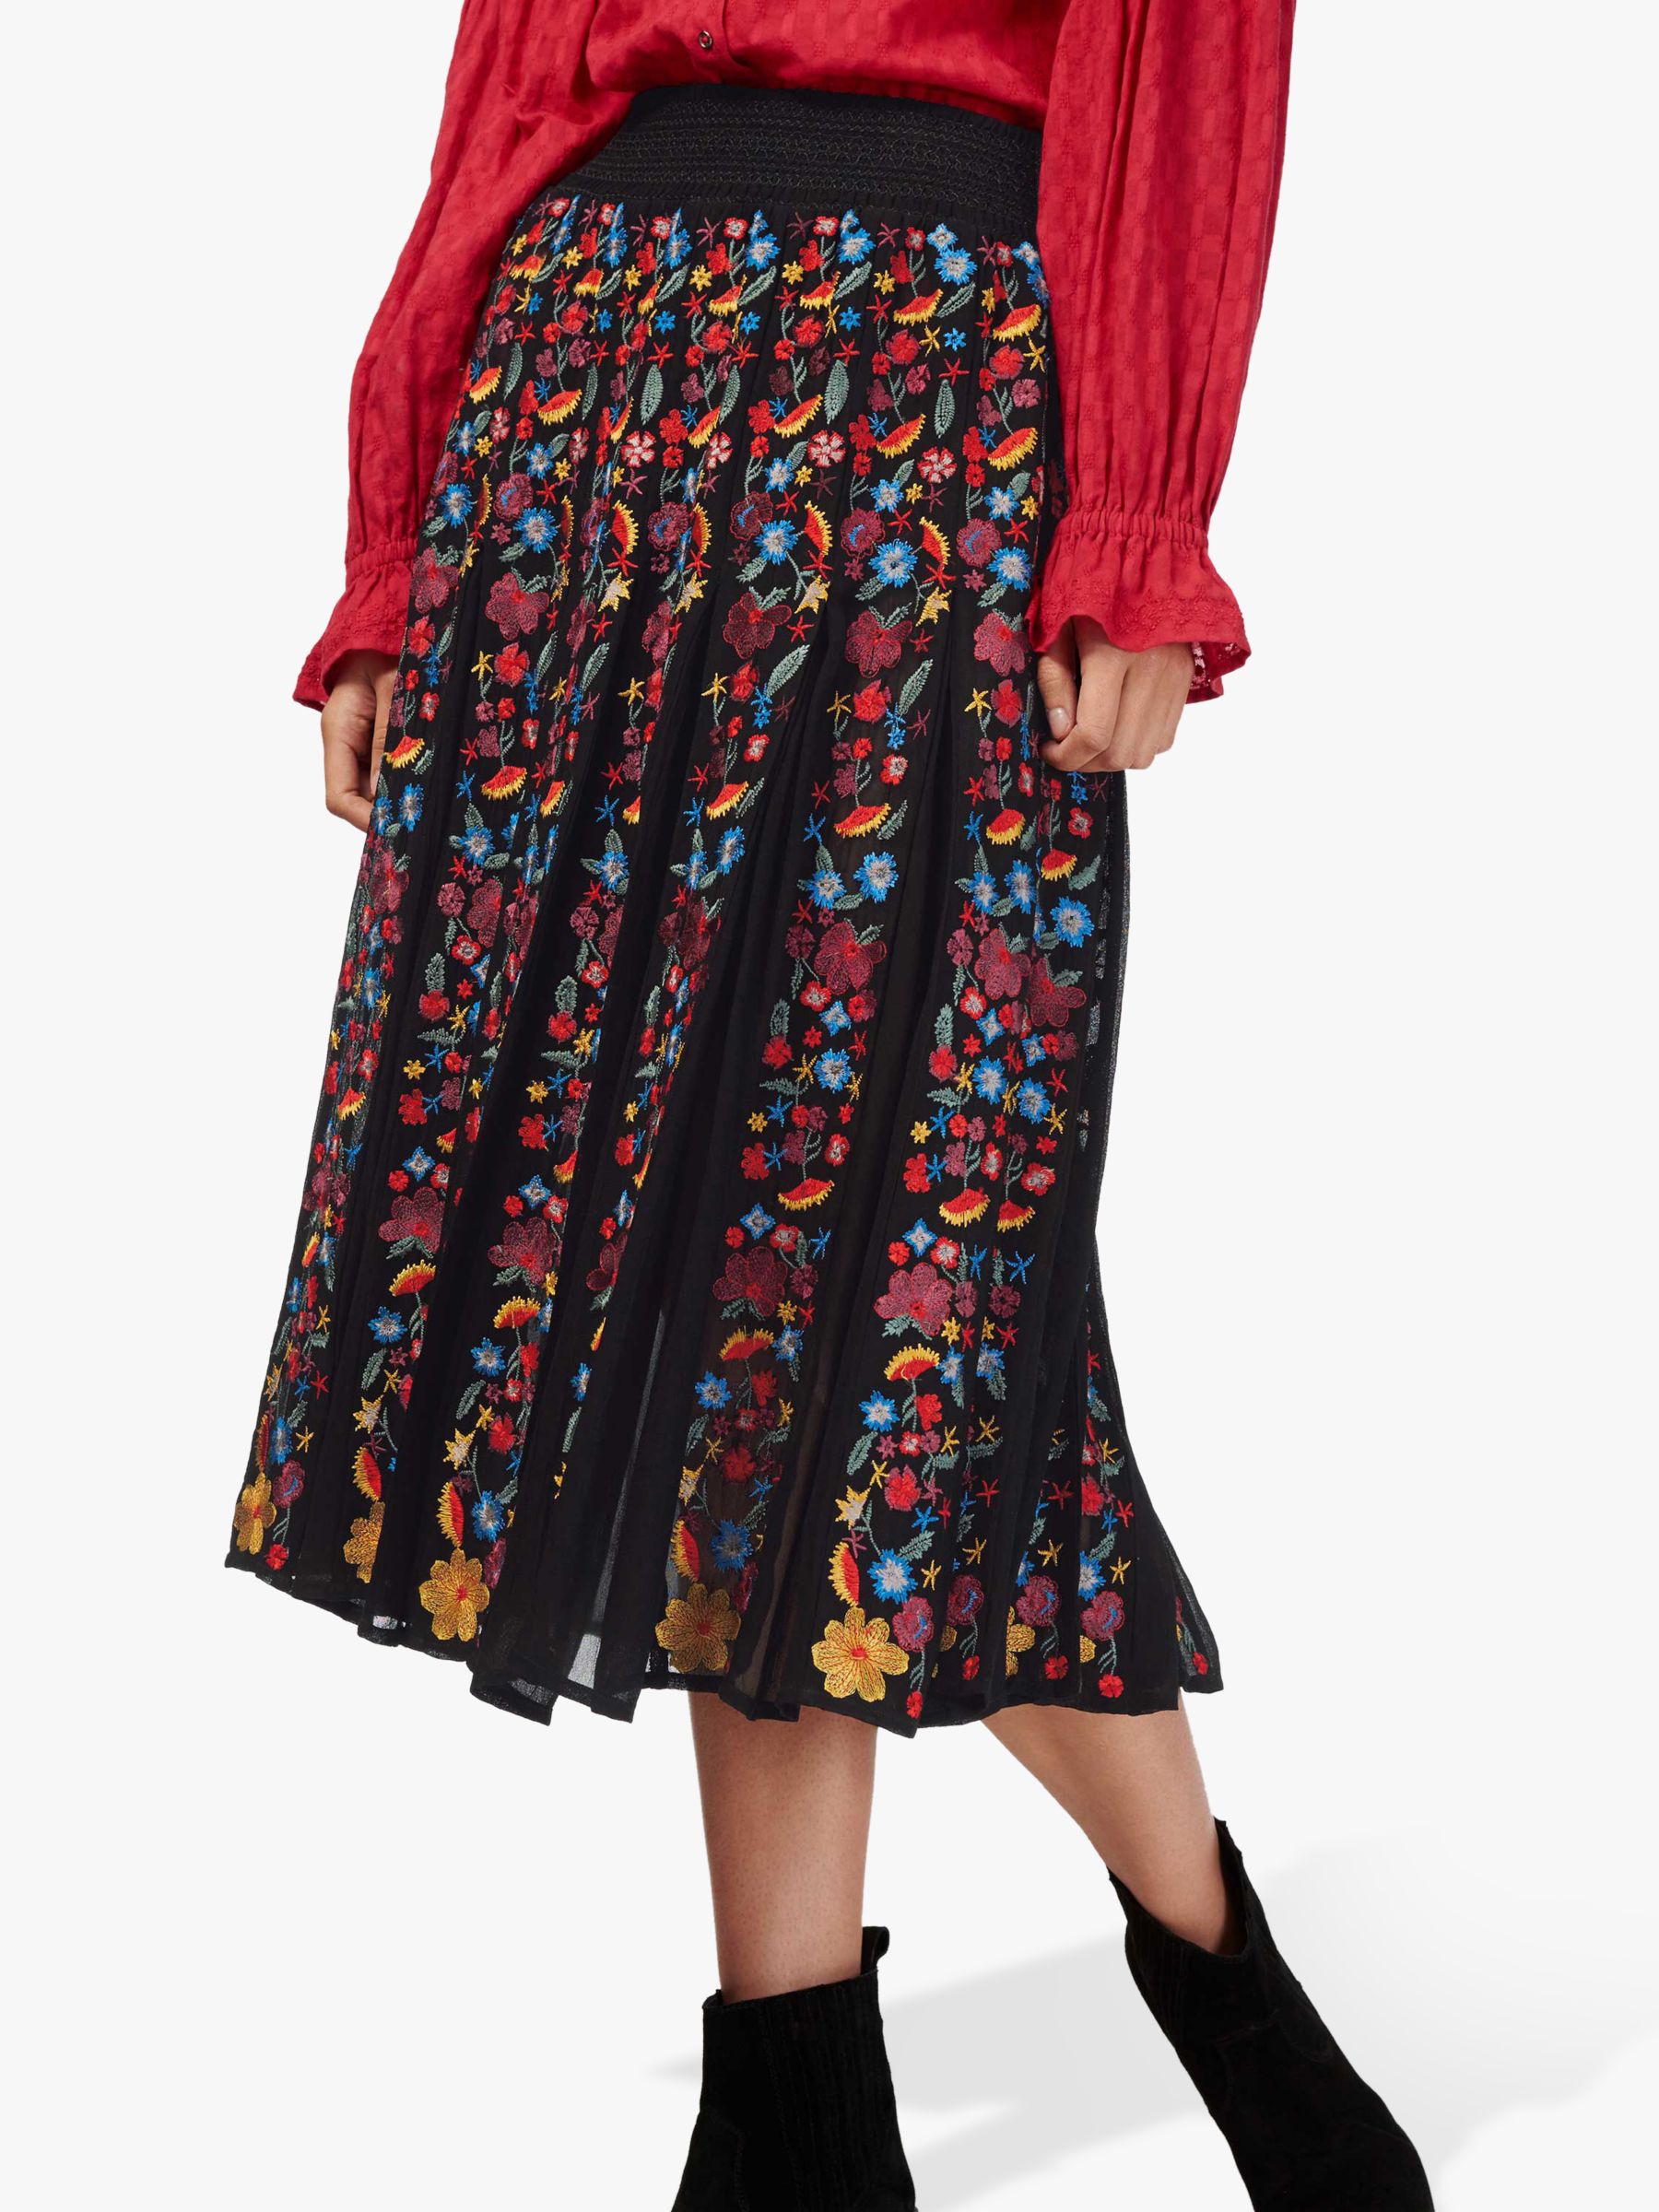 Brora Floral Embroidered Folk Skirt, Black at John Lewis & Partners